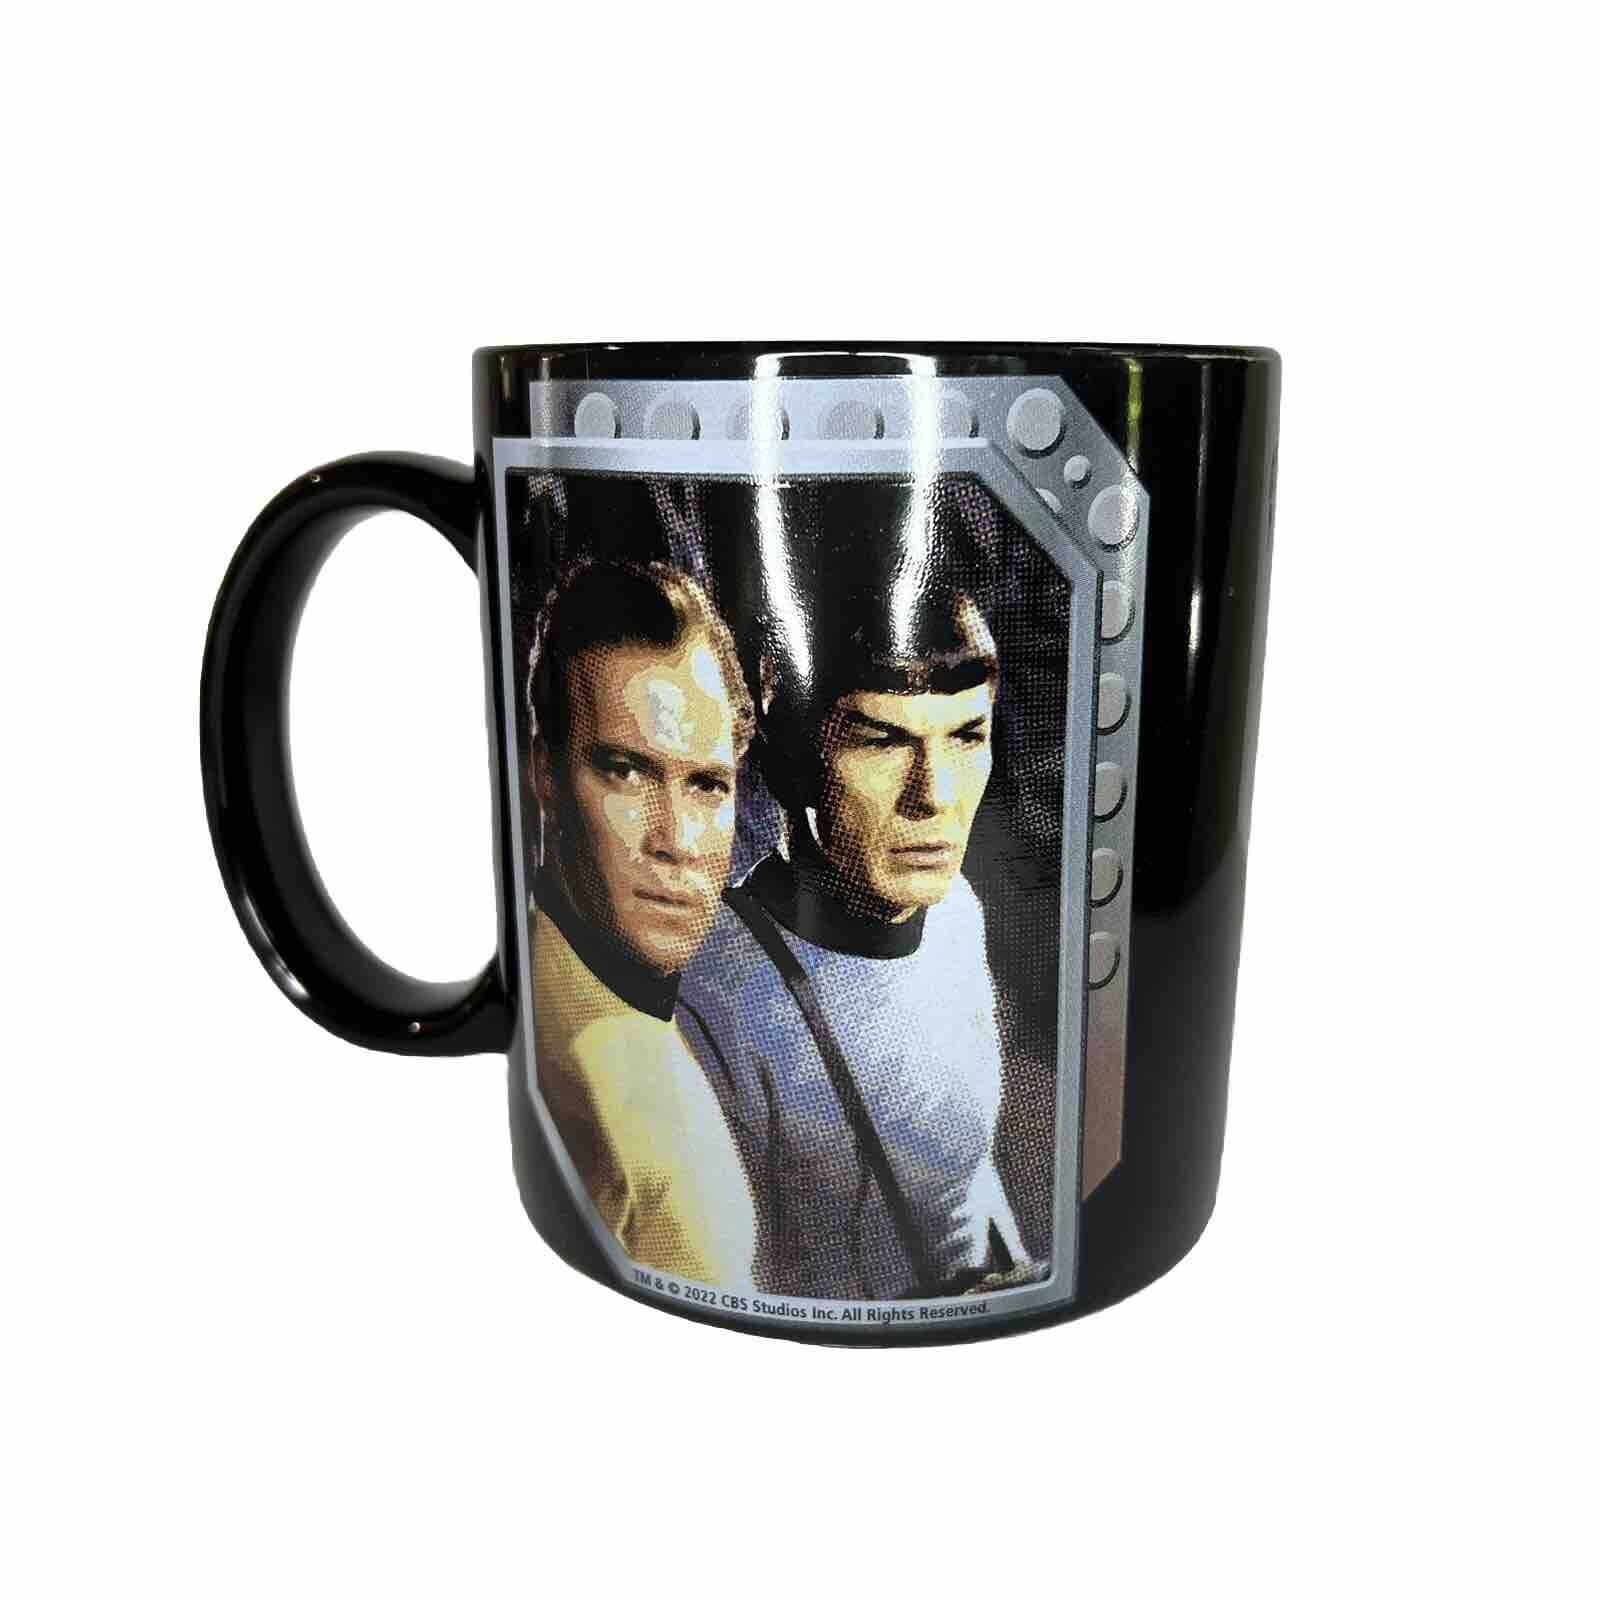 Star Trek Large Coffee Mug Collectible Black 21oz Original Captain Kirk Mr Spock